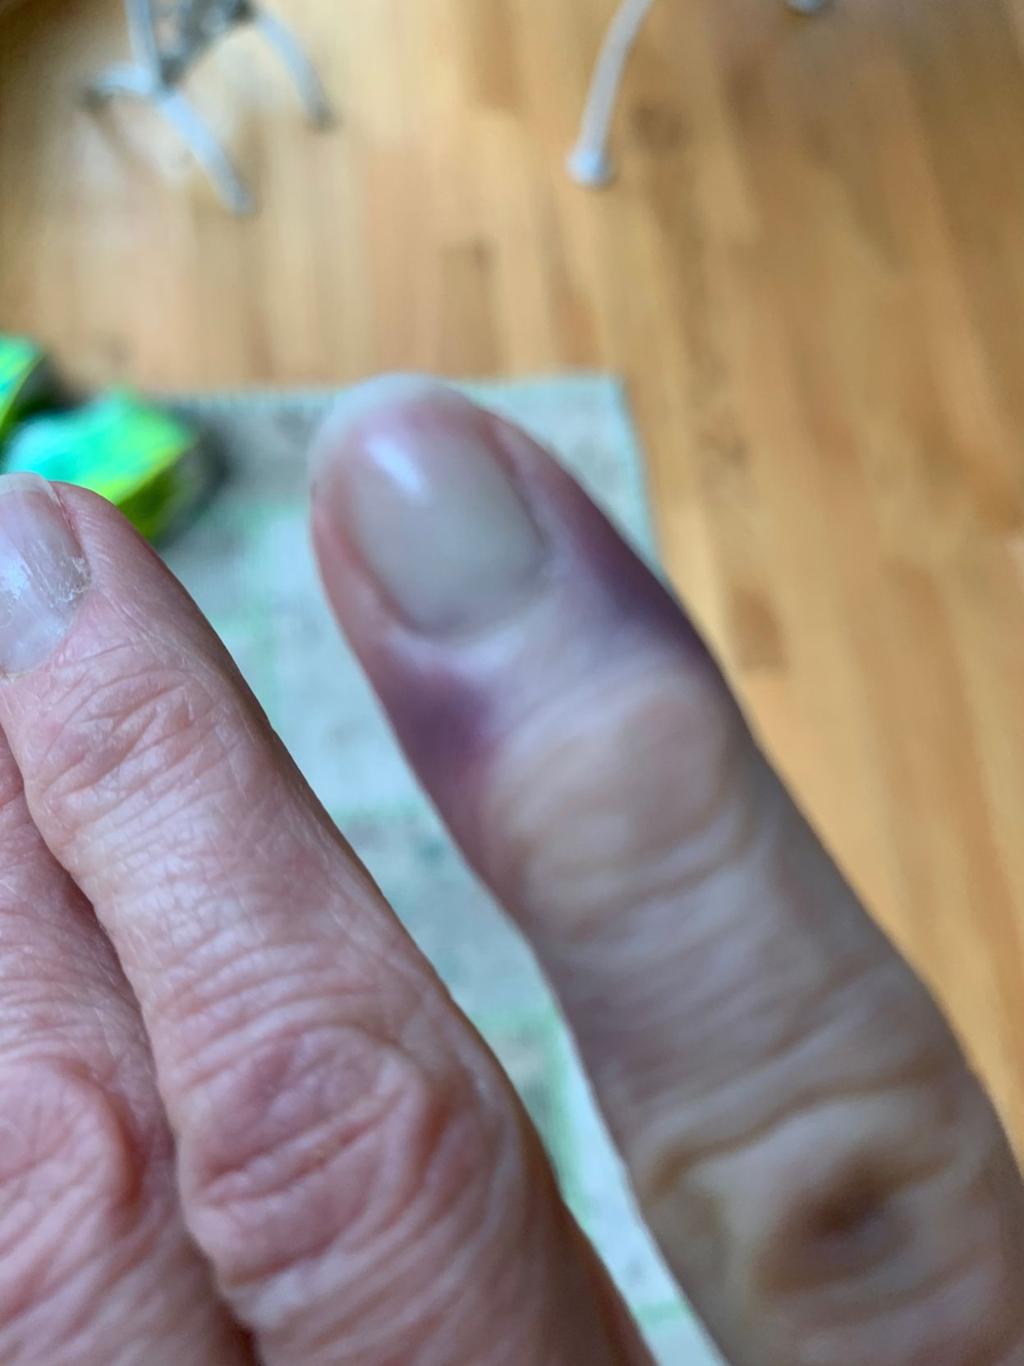 Yes Covid Toe A Bizarre Post Coronavirus Symptom Causes Purple Fingers Toes Maybe Even Ears Coronavirus Theadvocate Com